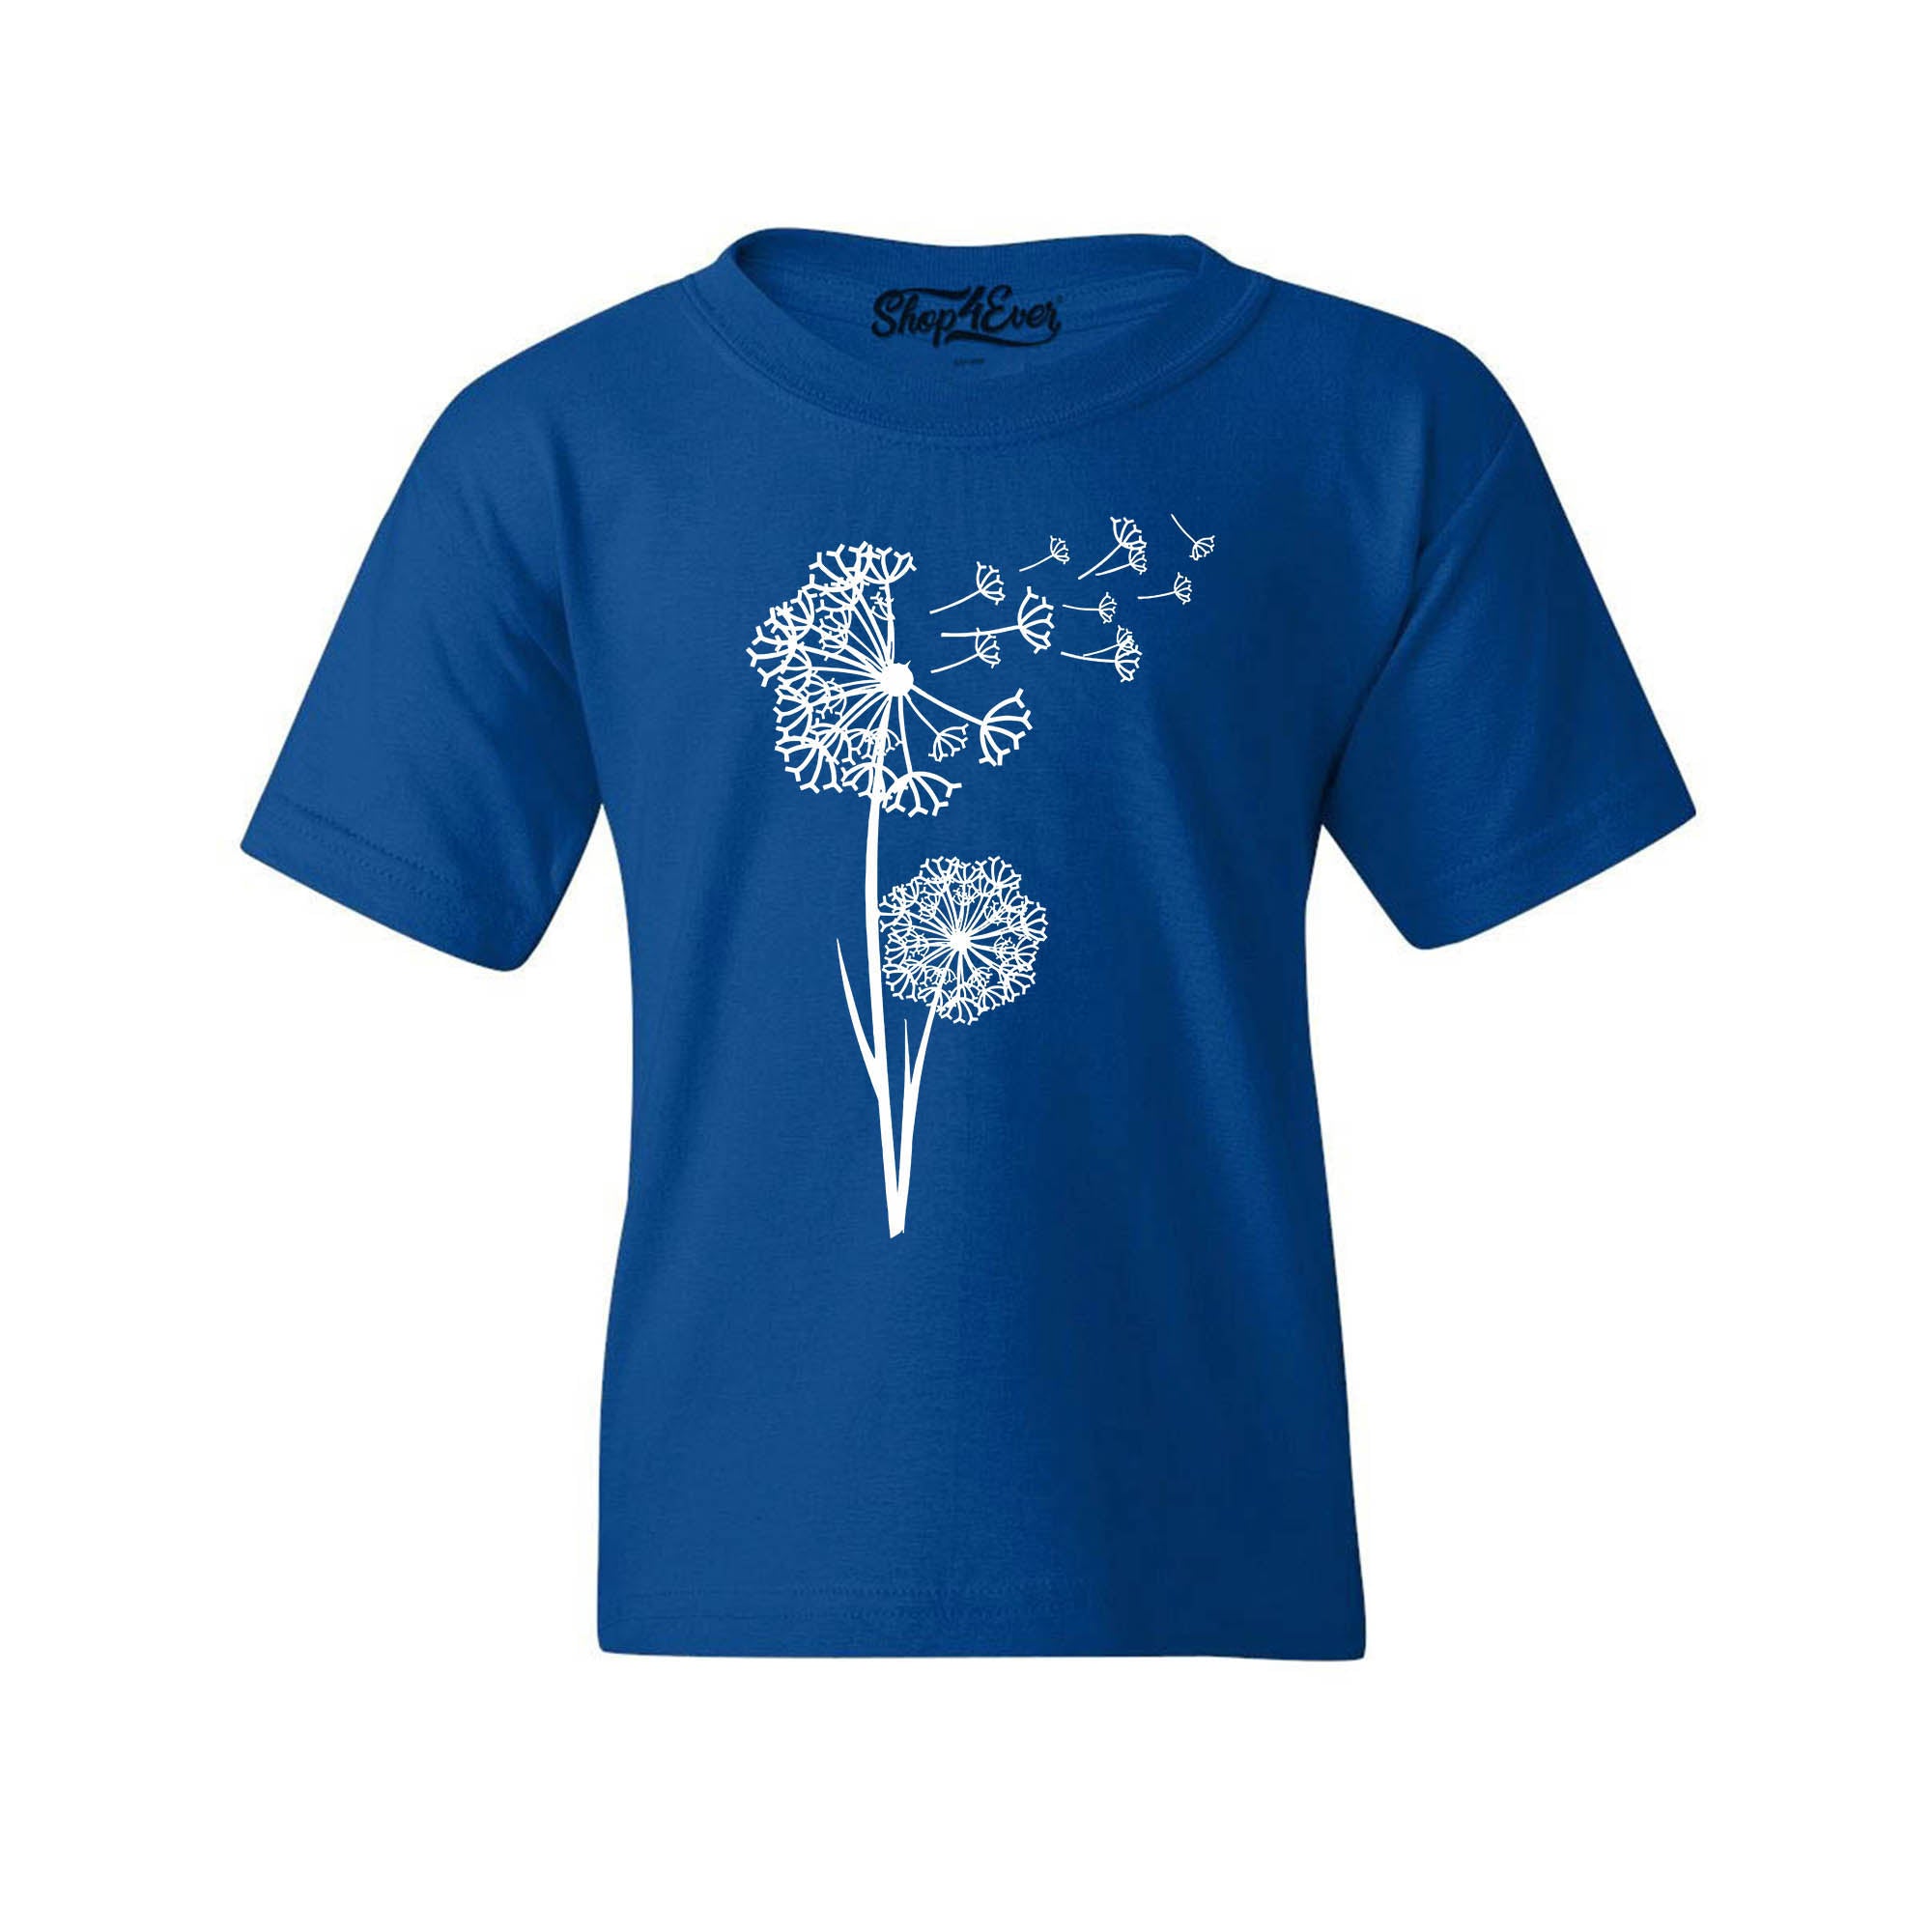 Dandelion Blowing Wish Flower Wildflowers Child's T-Shirt Kids Tee